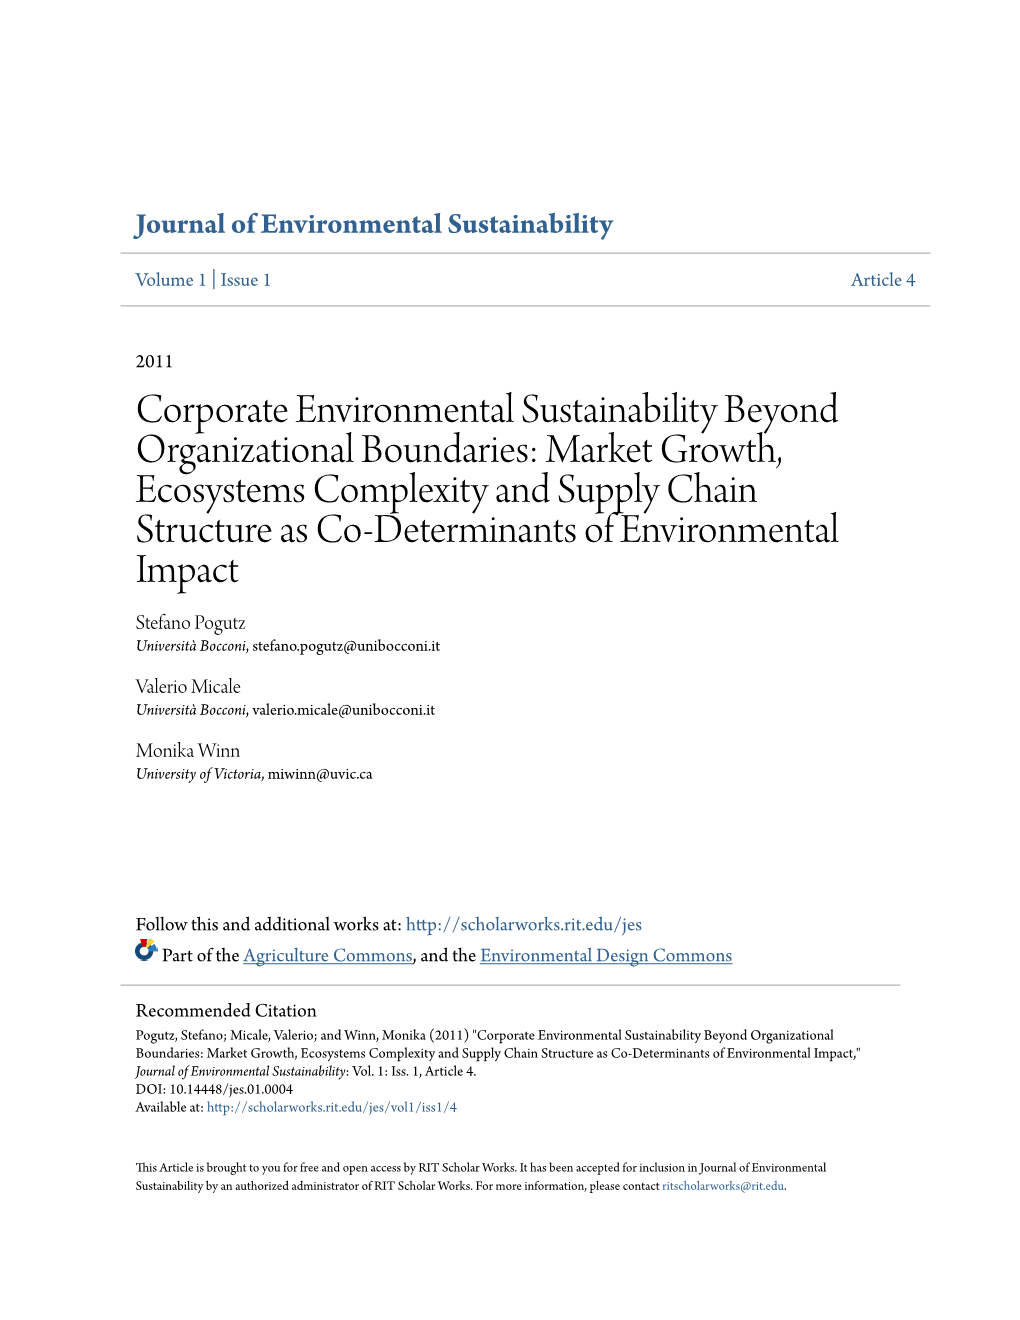 Corporate Environmental Sustainability